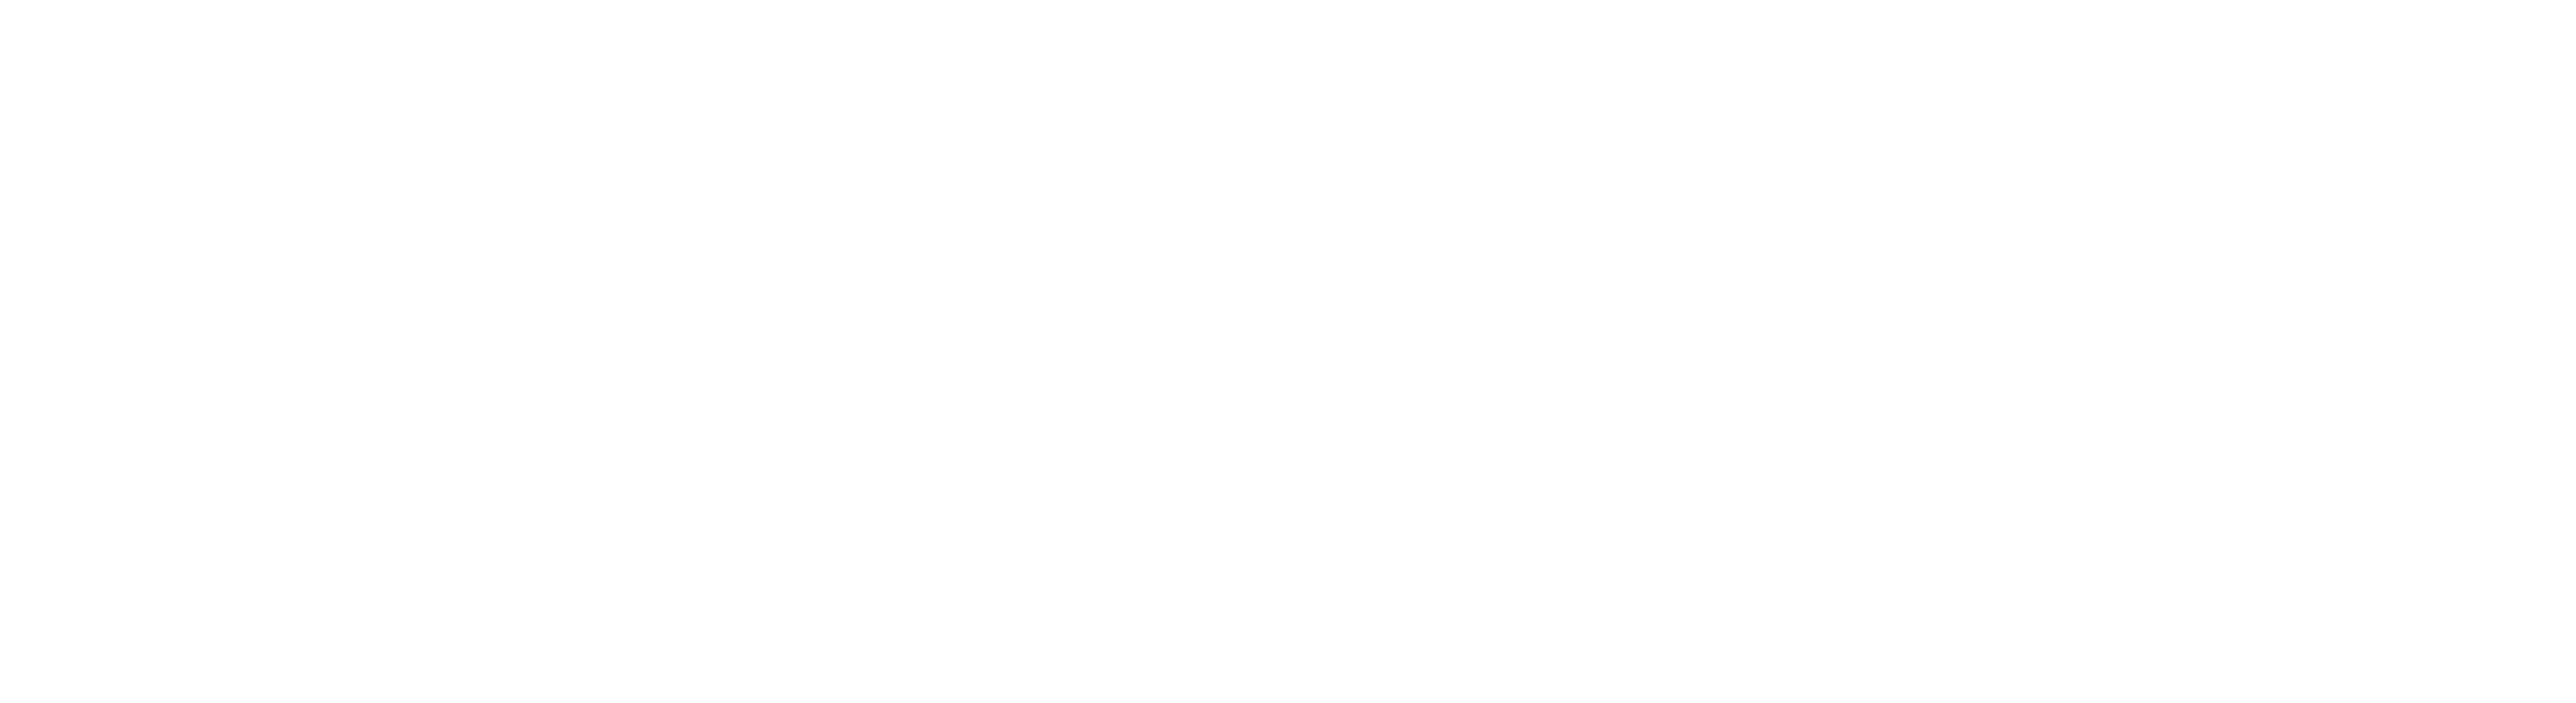 ACBJ_Atlanta-_horiz